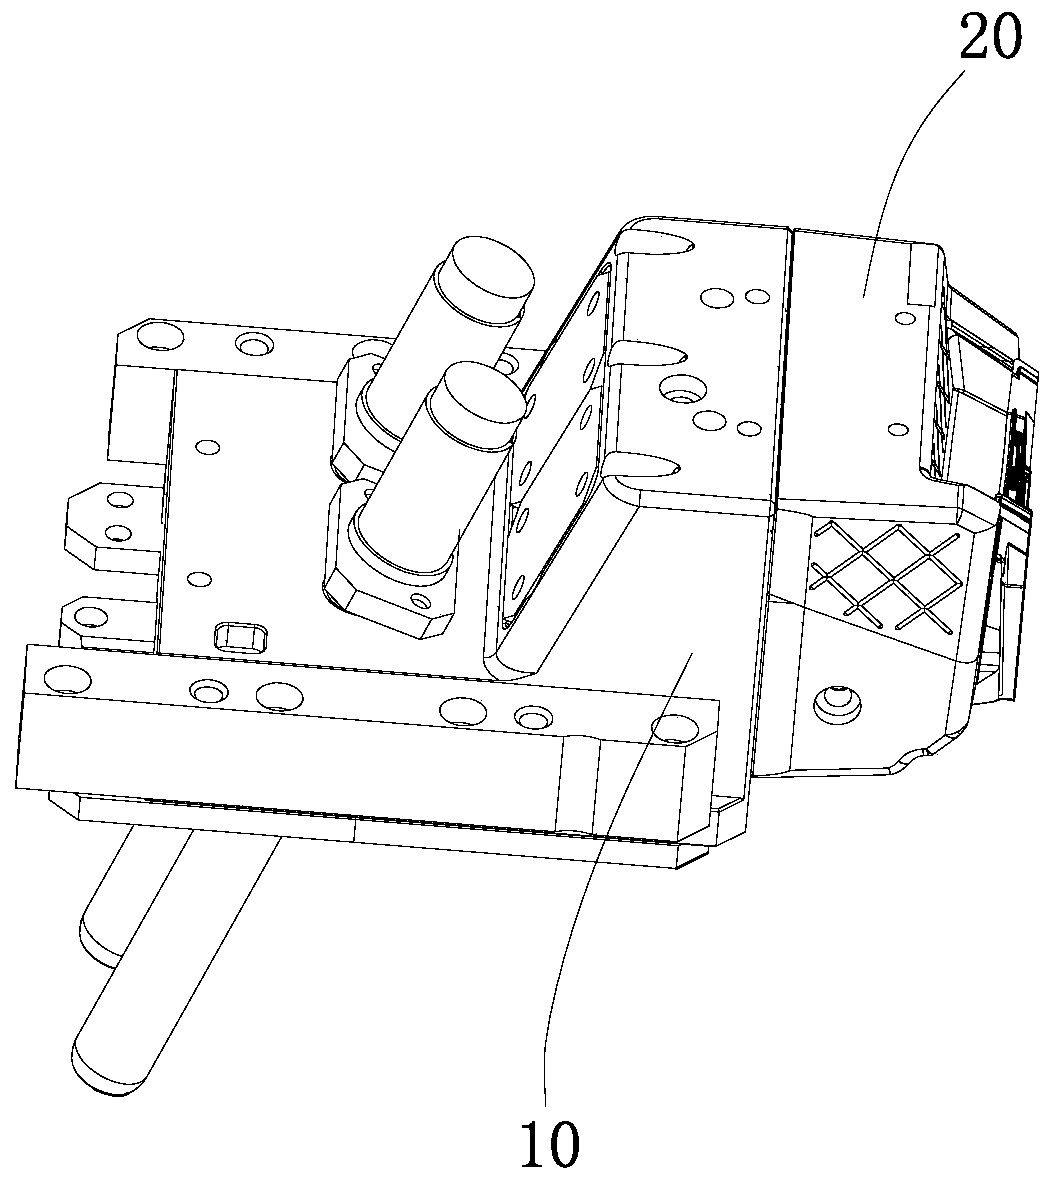 Demolding mechanism of multi-direction core pulling sliding block